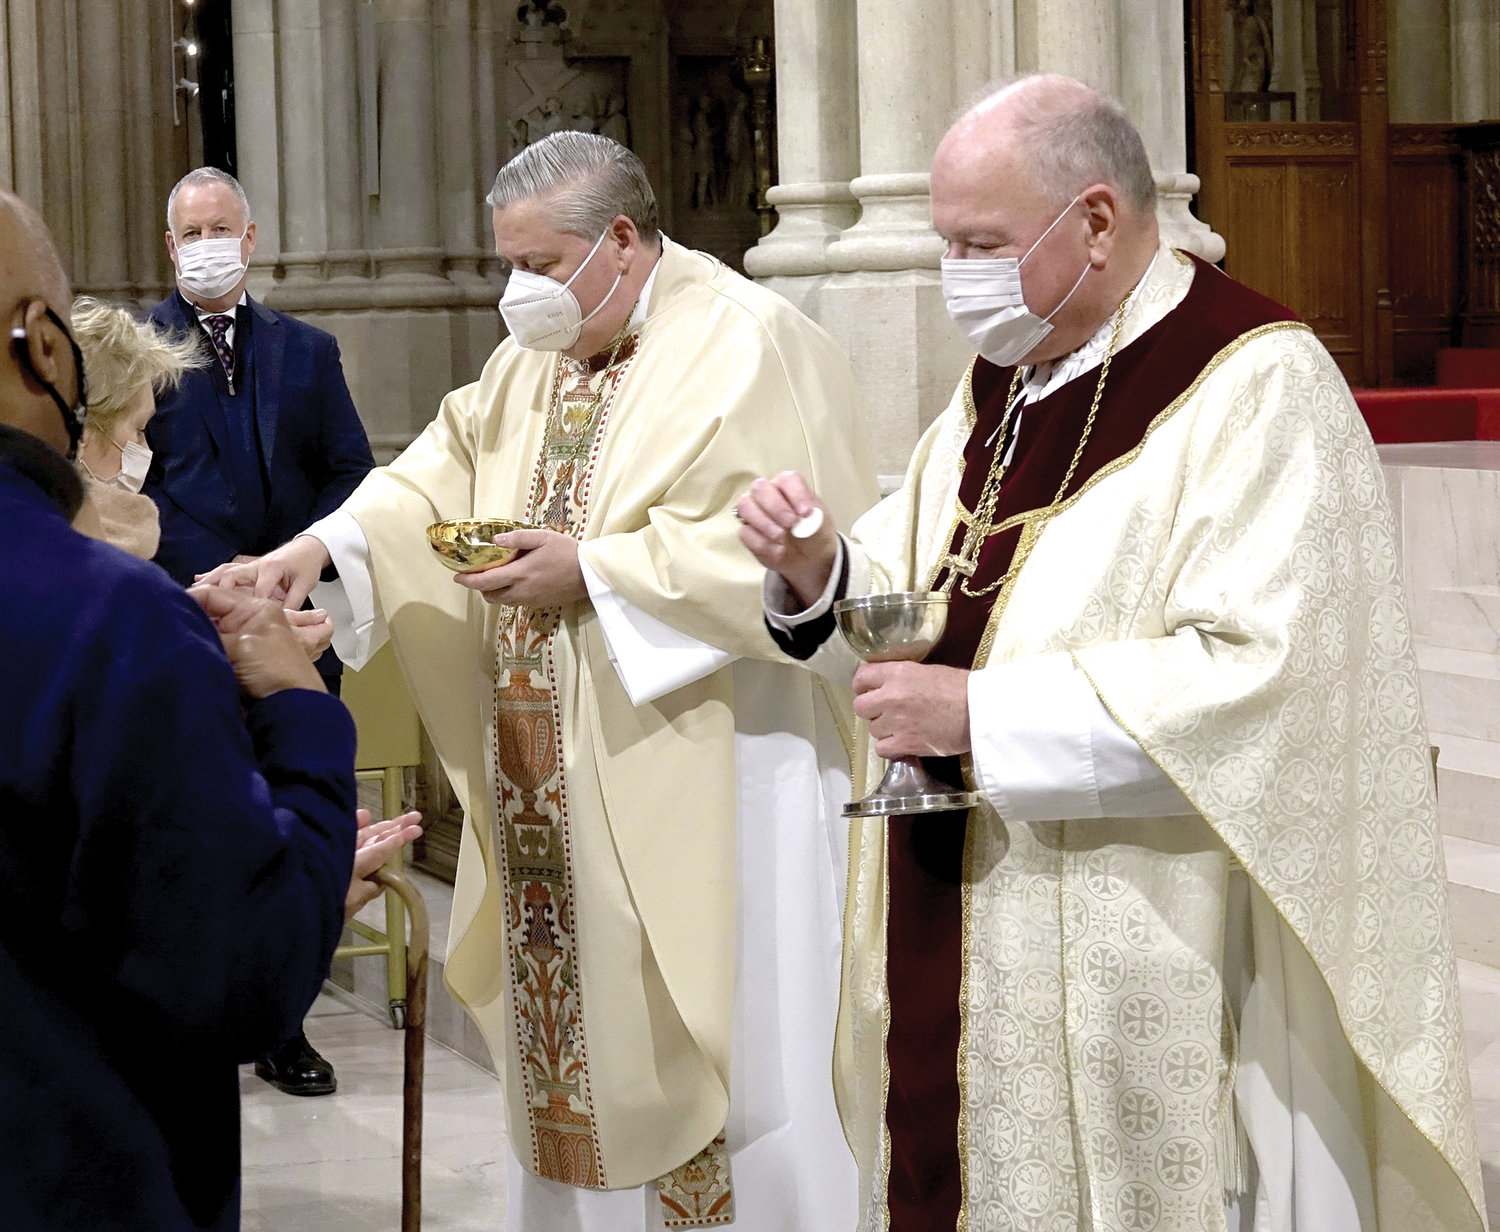 Bishop-elect Bonnici and Cardinal Dolan distribute the Eucharist.